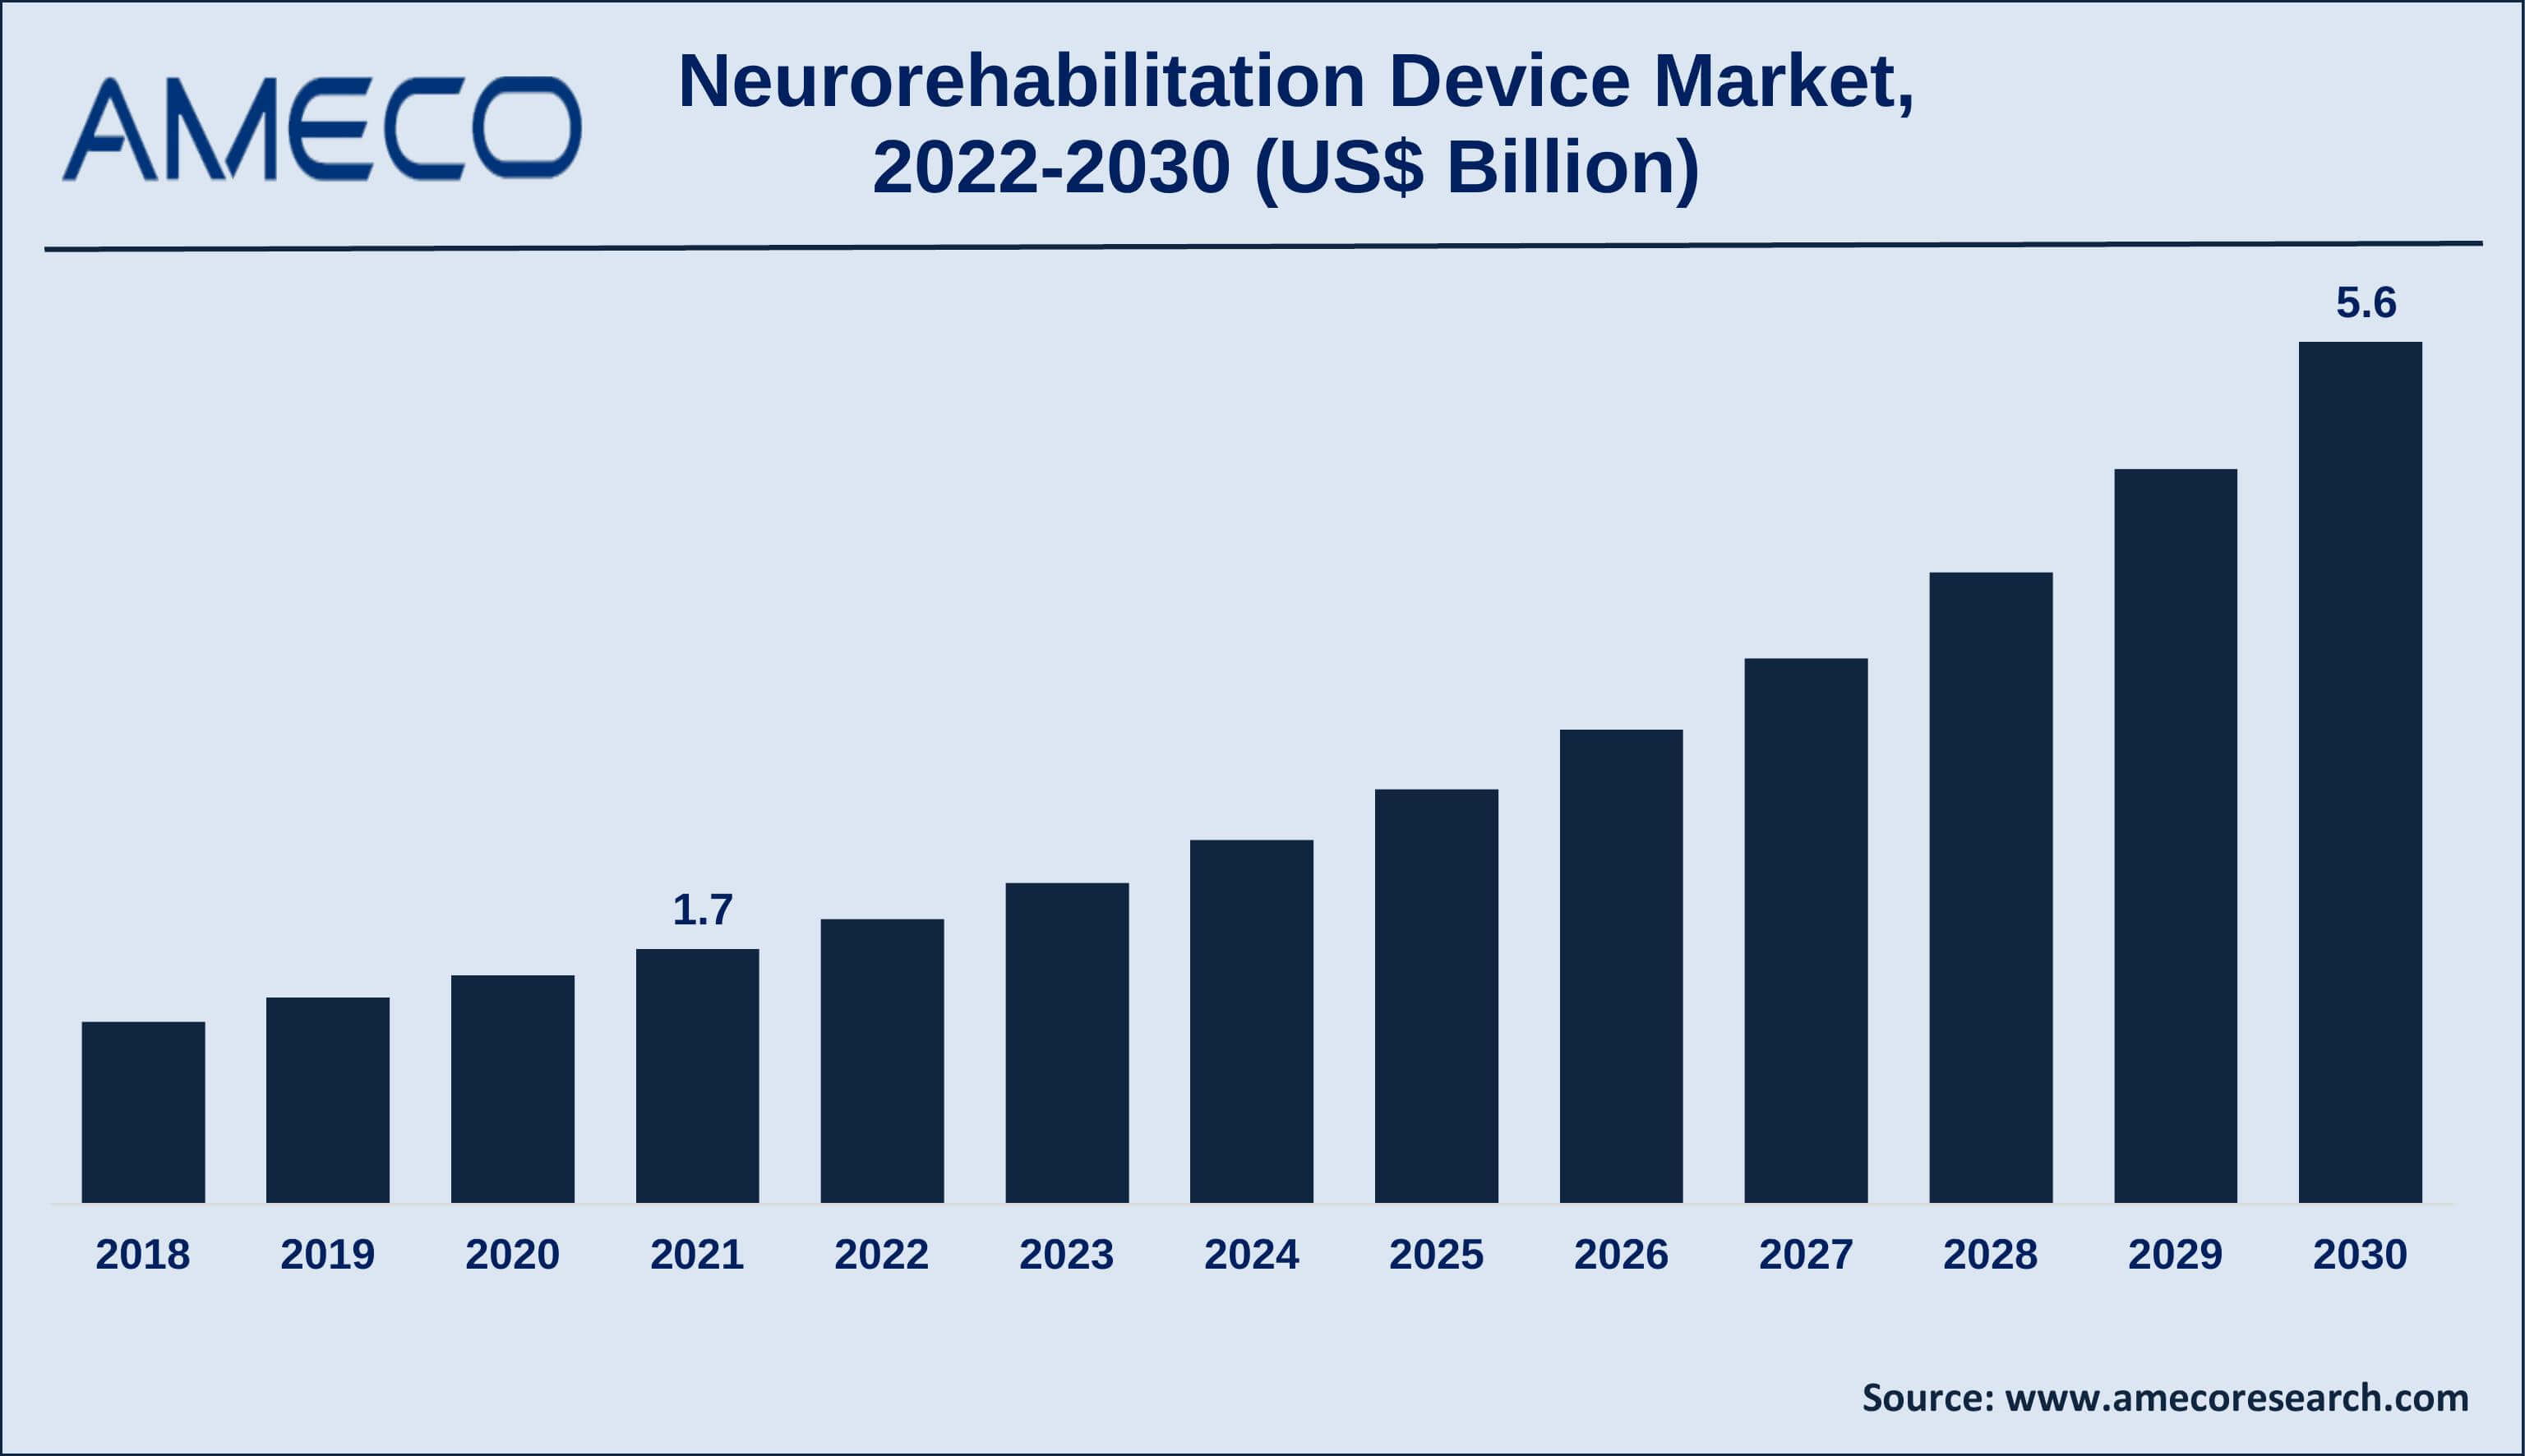 Neurorehabilitation Device Market Size, Share, Growth, Trends, and Forecast 2022-2030